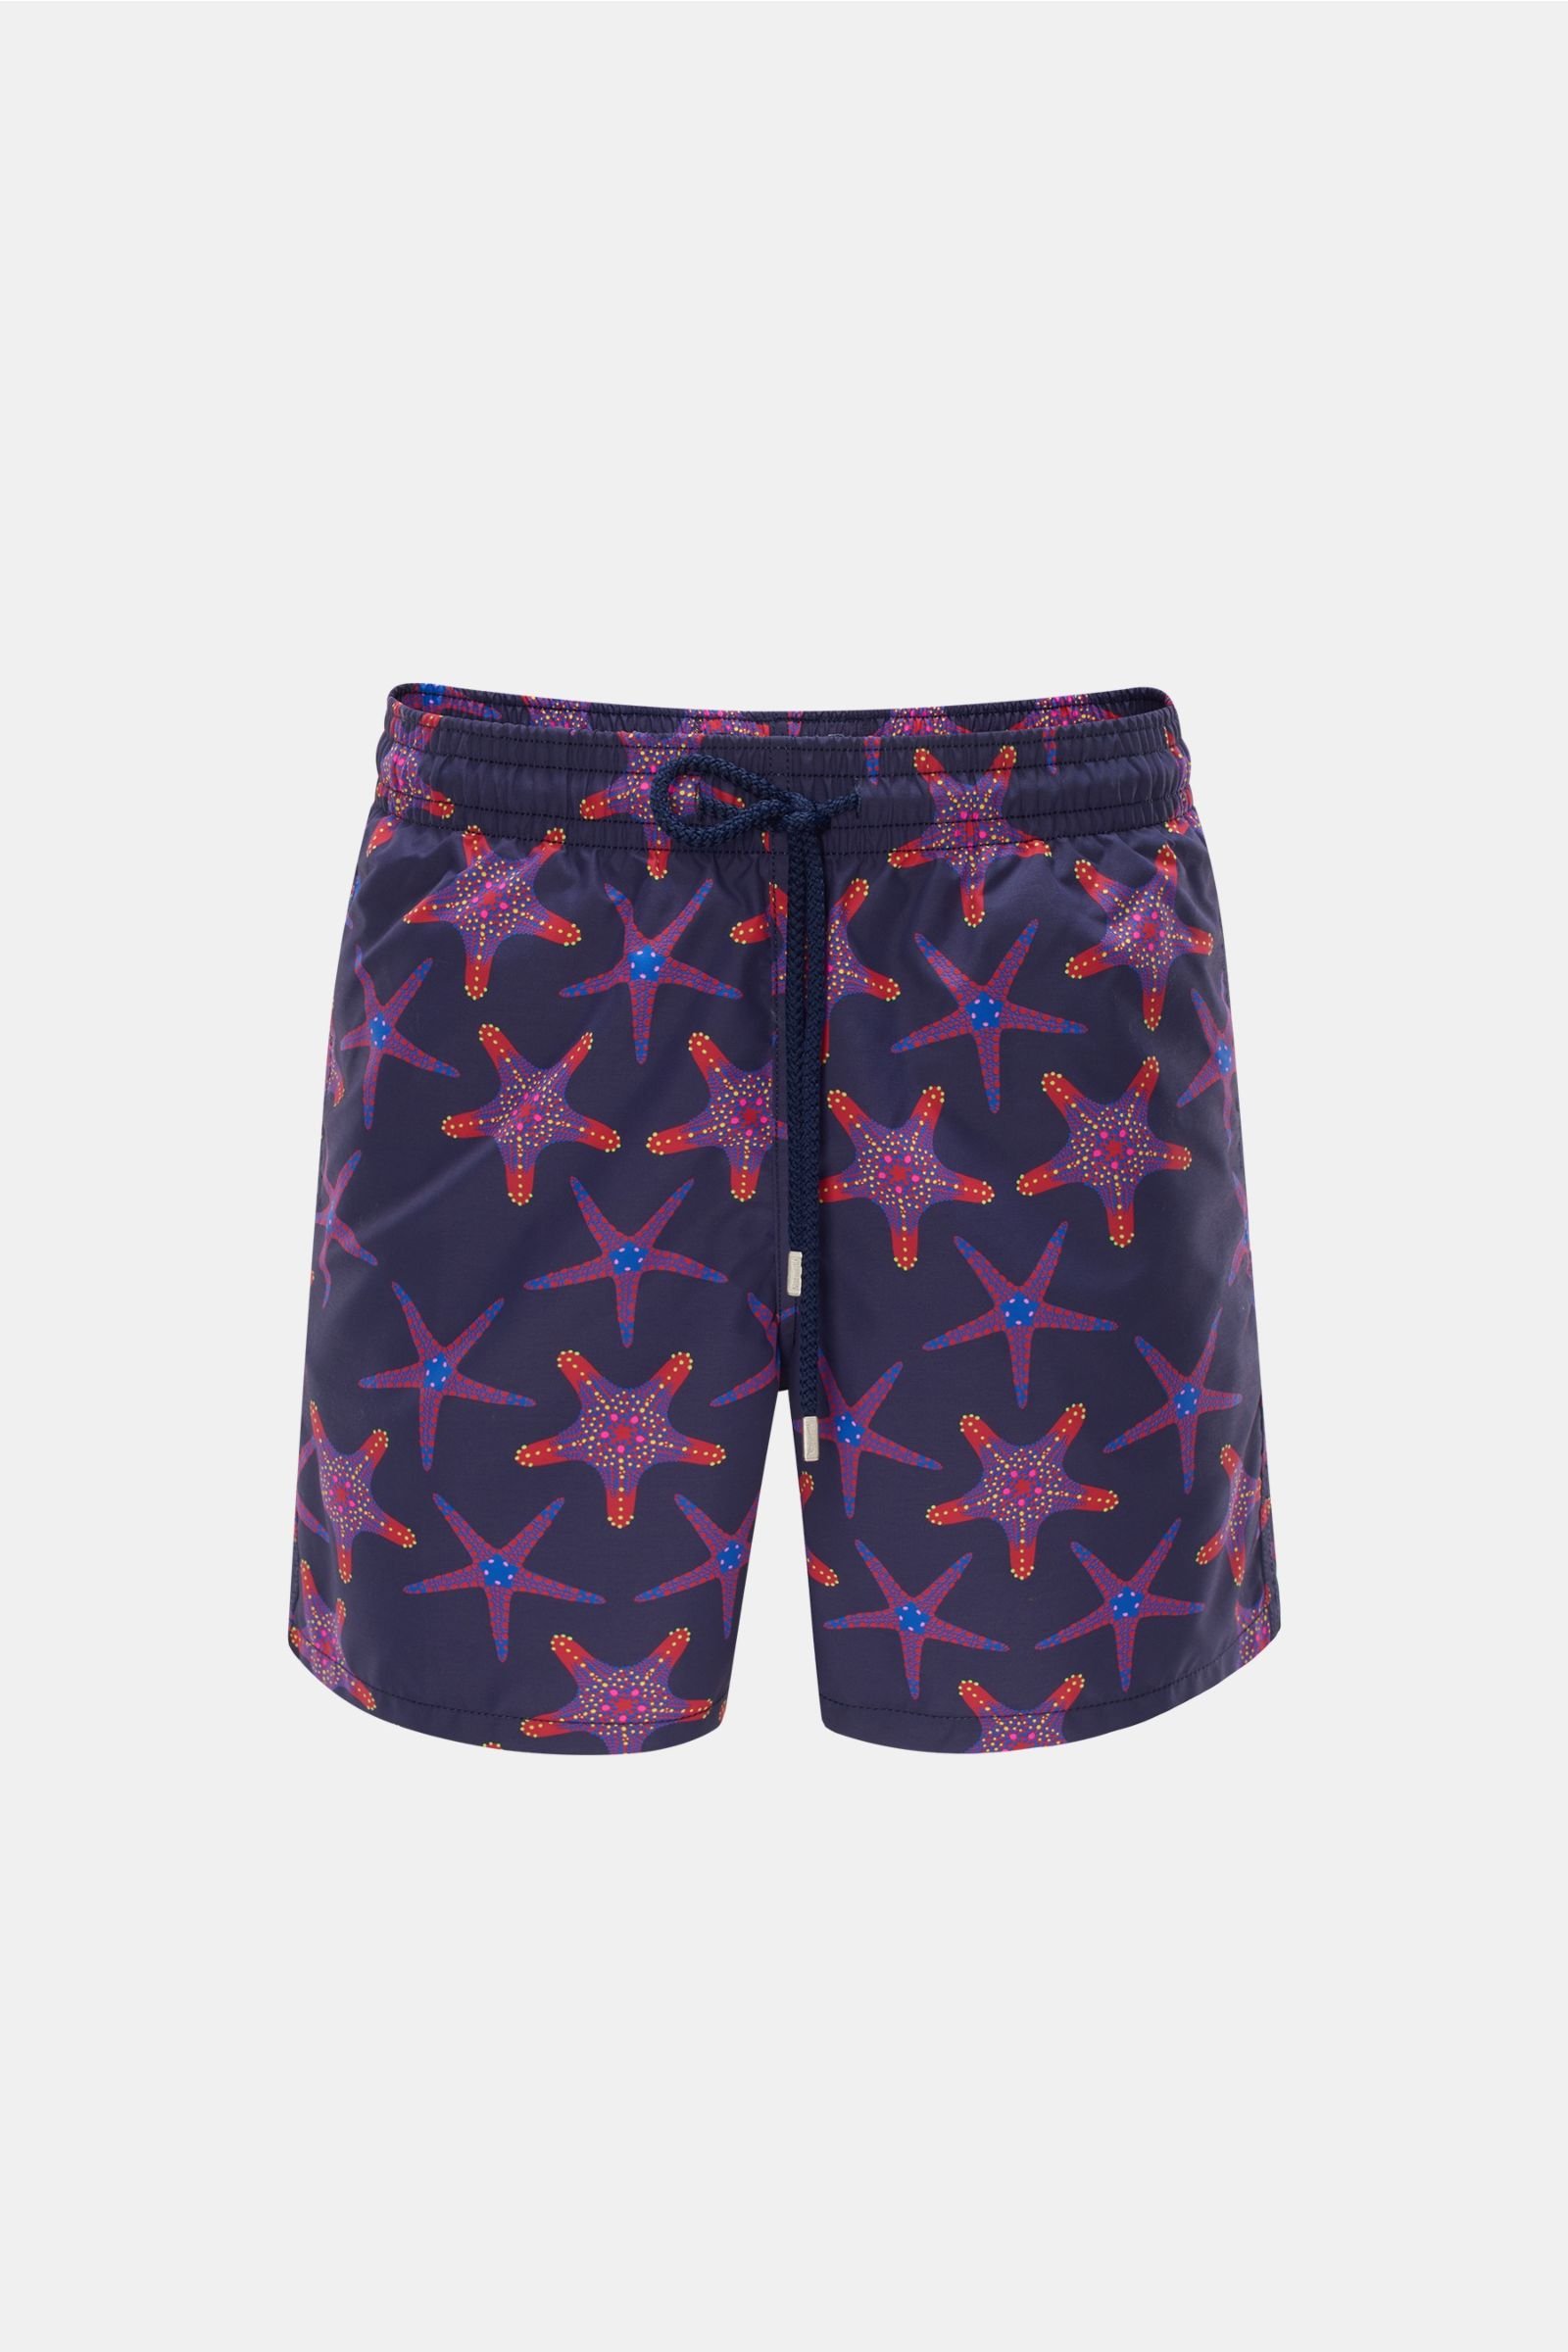 Swim shorts 'Moorea' navy/red patterned